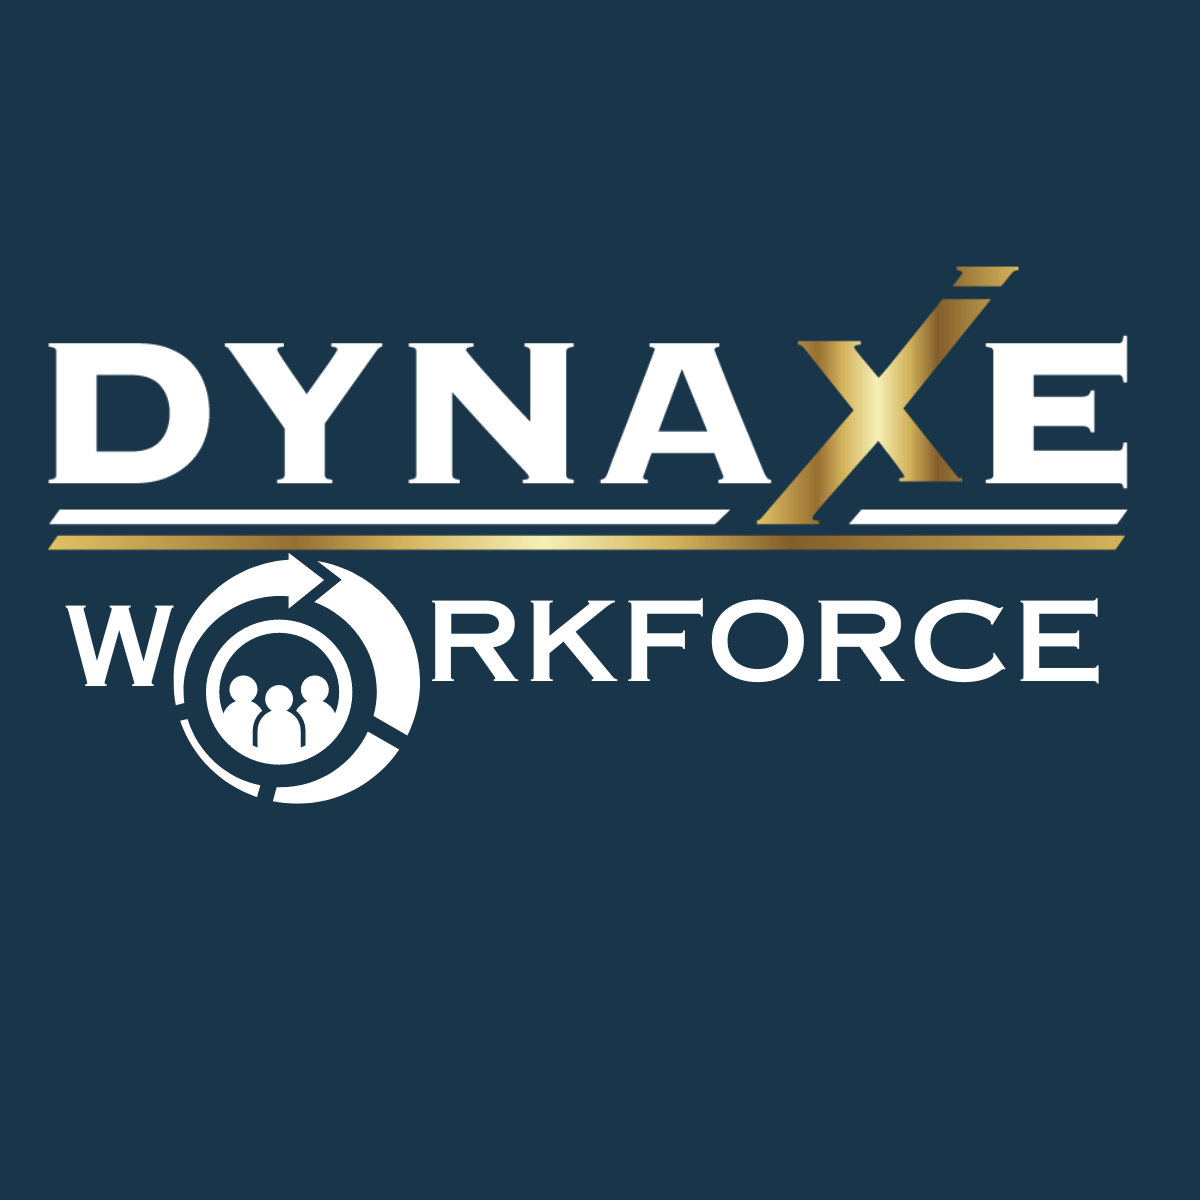 Dynaxe Workforce